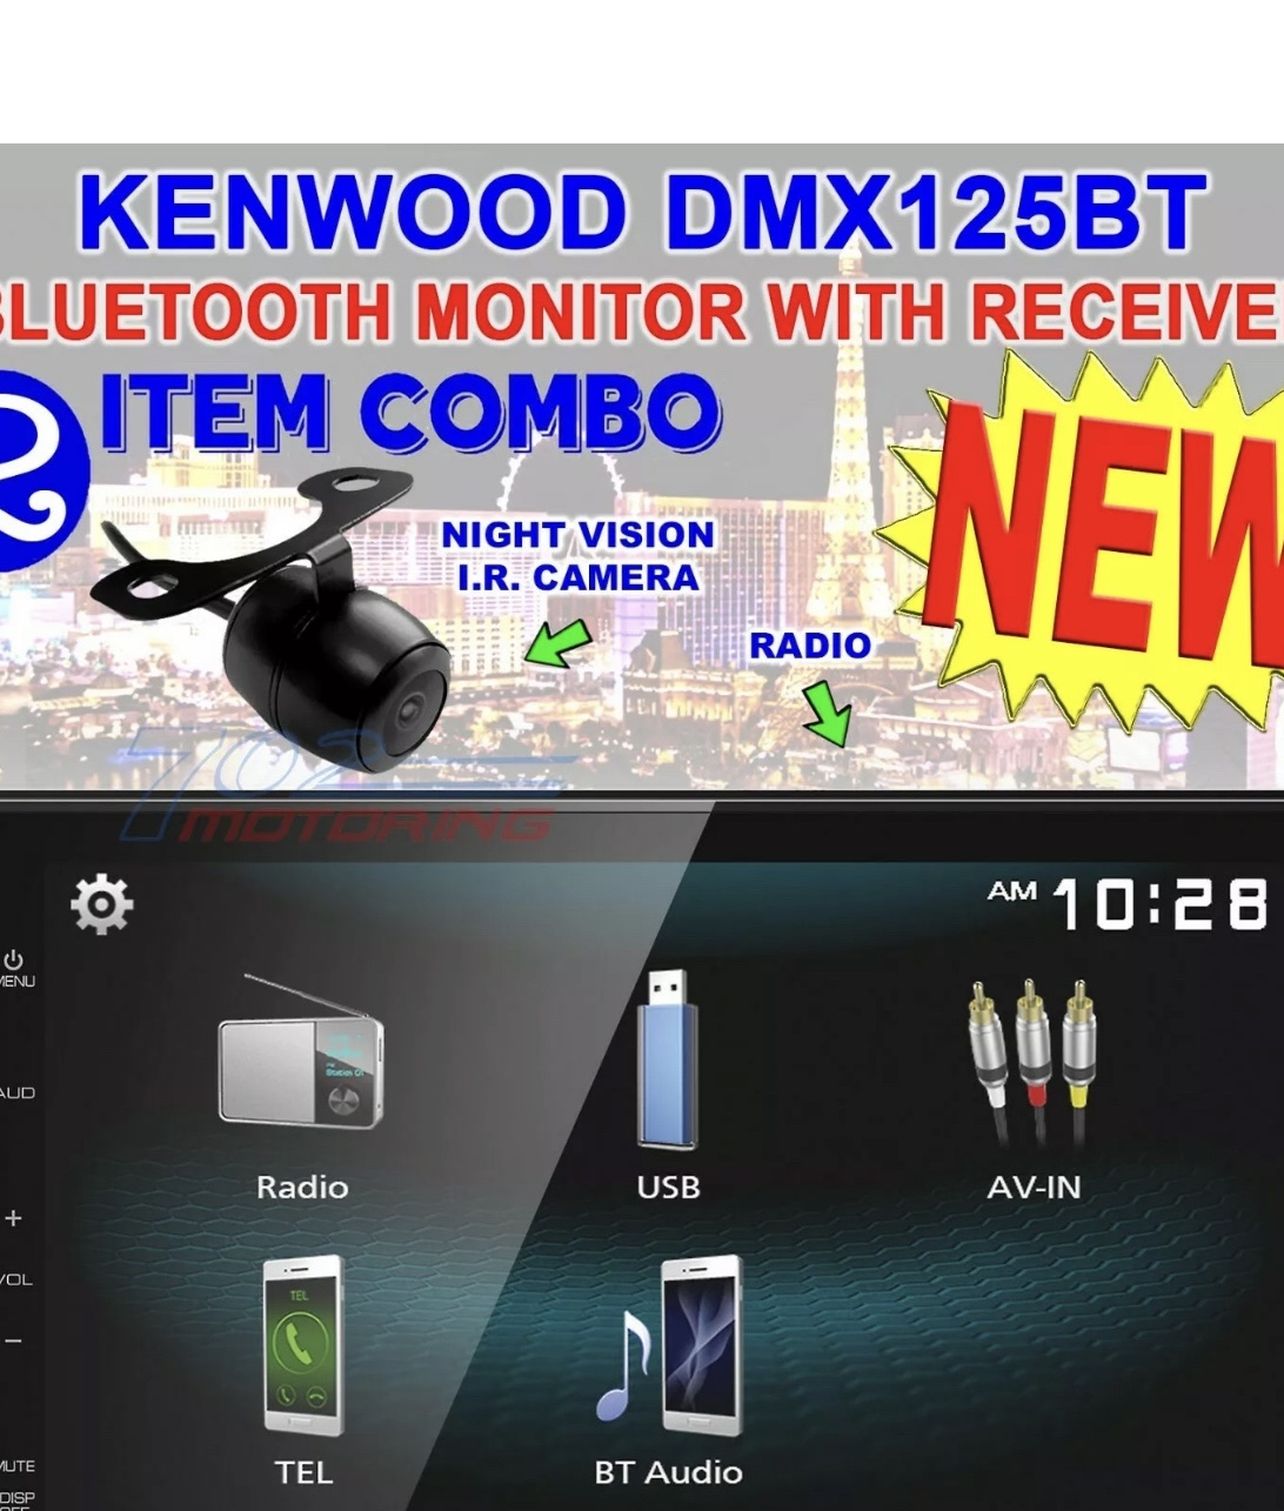 KENWOOD DMX125BT DOUBLE DIN 6.8” TOUCHSCREEN CAR STEREO DIGITAL MEDIEA RECEIVER